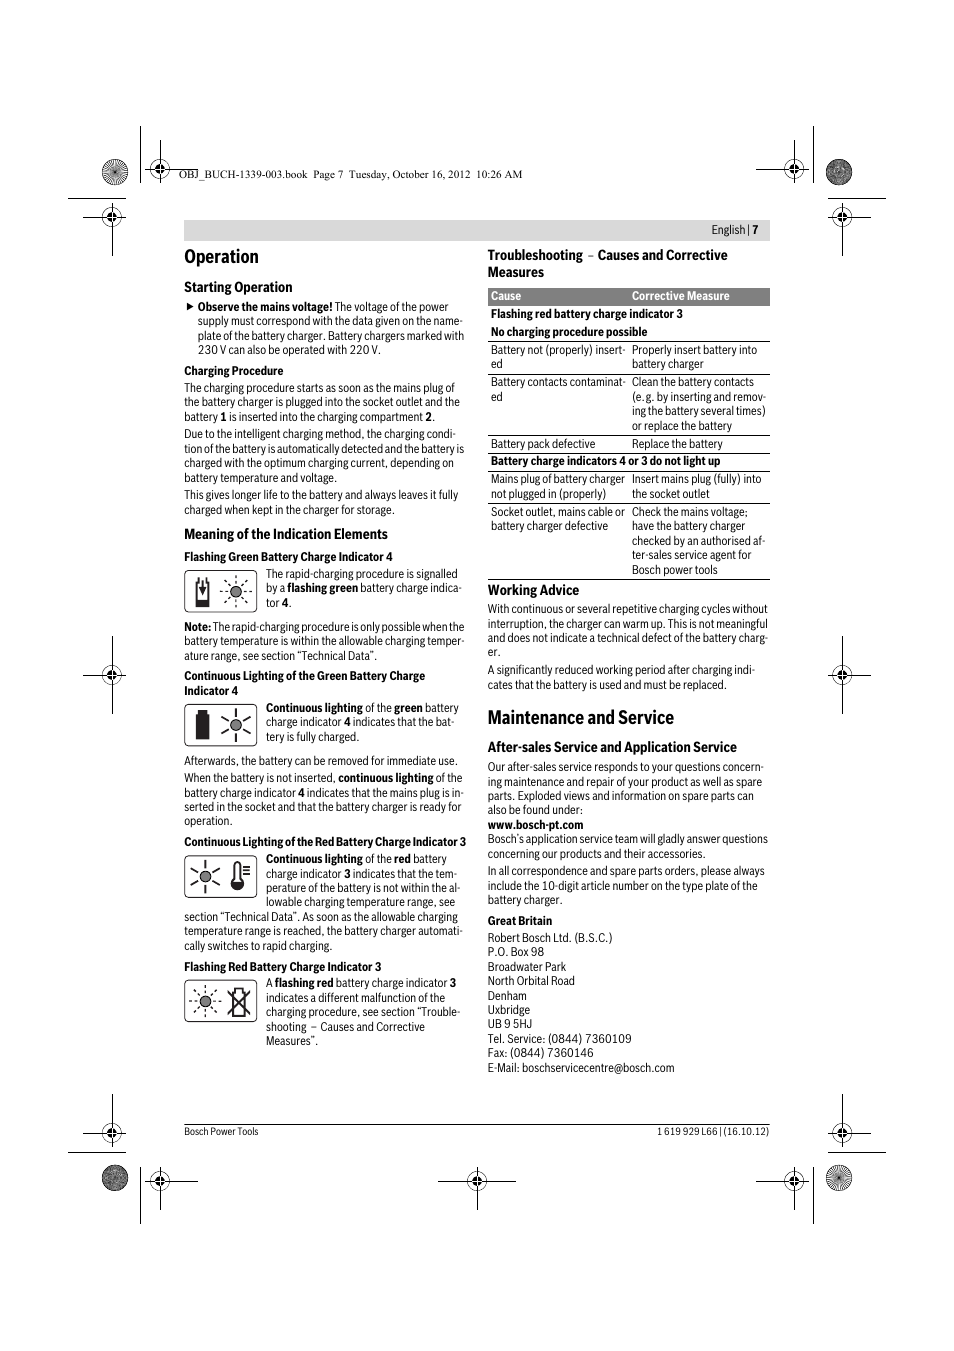 Operation, Maintenance and service | Bosch AL 1130 CV User Manual | Page 7  / 65